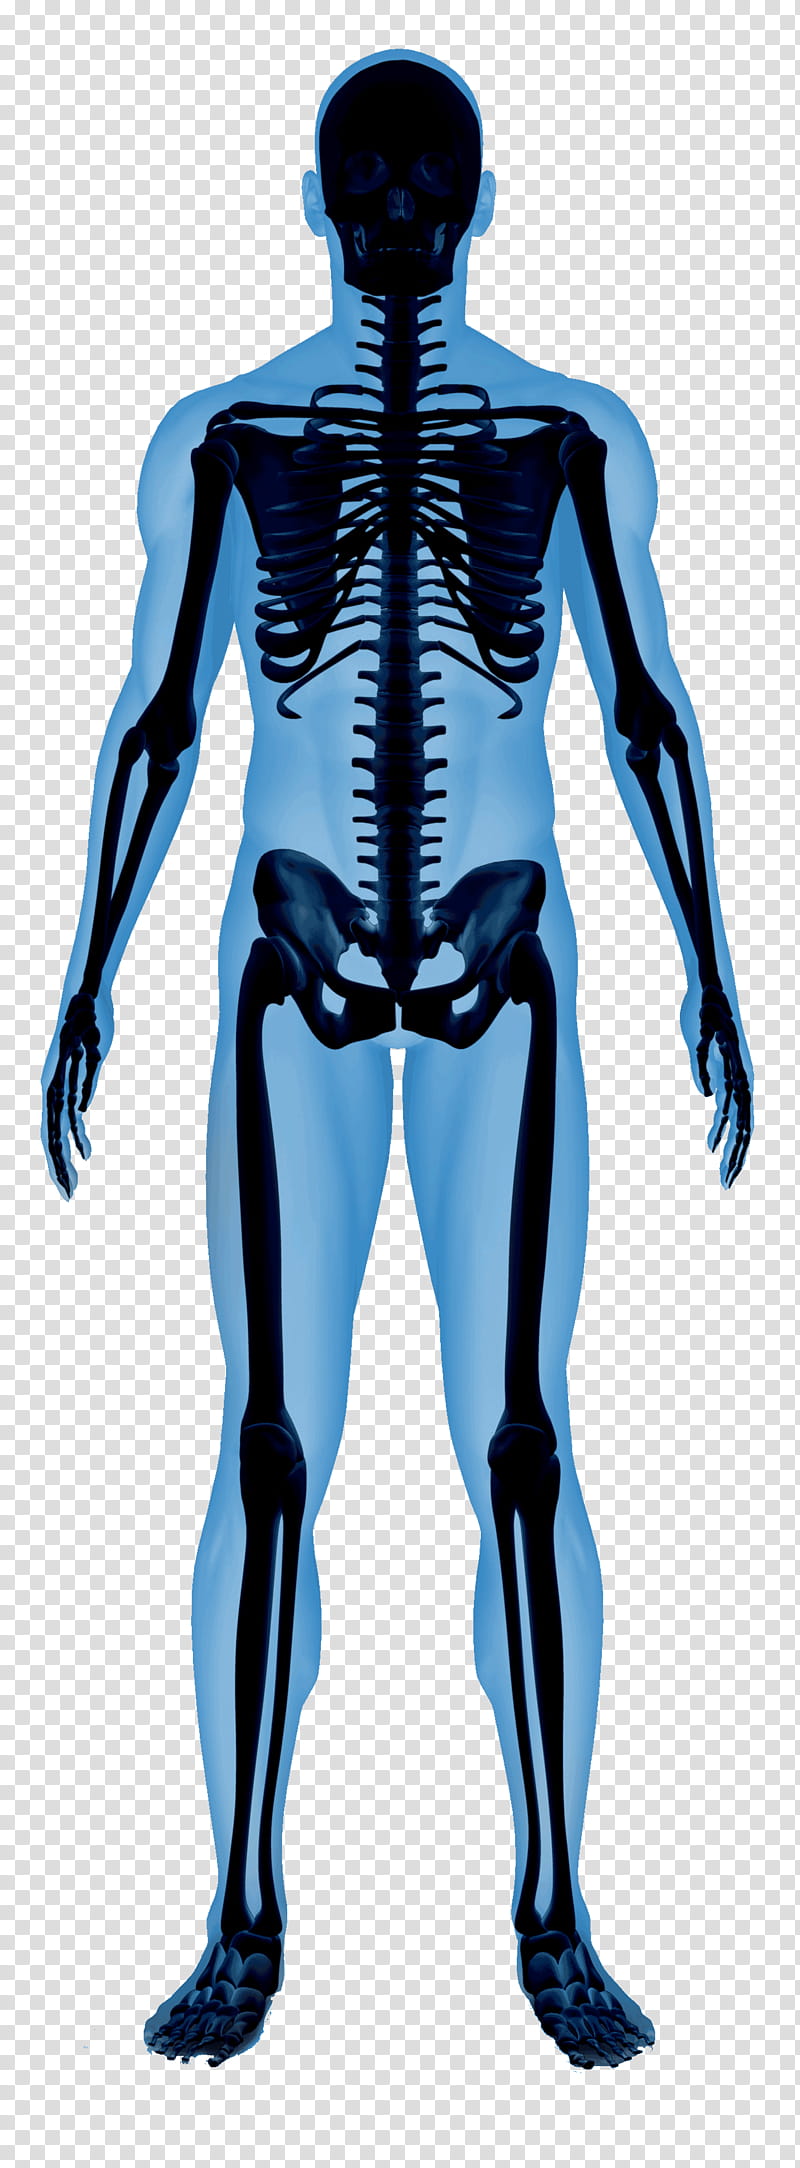 Human Skeleton Skeleton, Anatomy, Human Body, Bone, Human Anatomy, Physiology, Laboratory Manual For Anatomy Physiology, Rib Cage transparent background PNG clipart